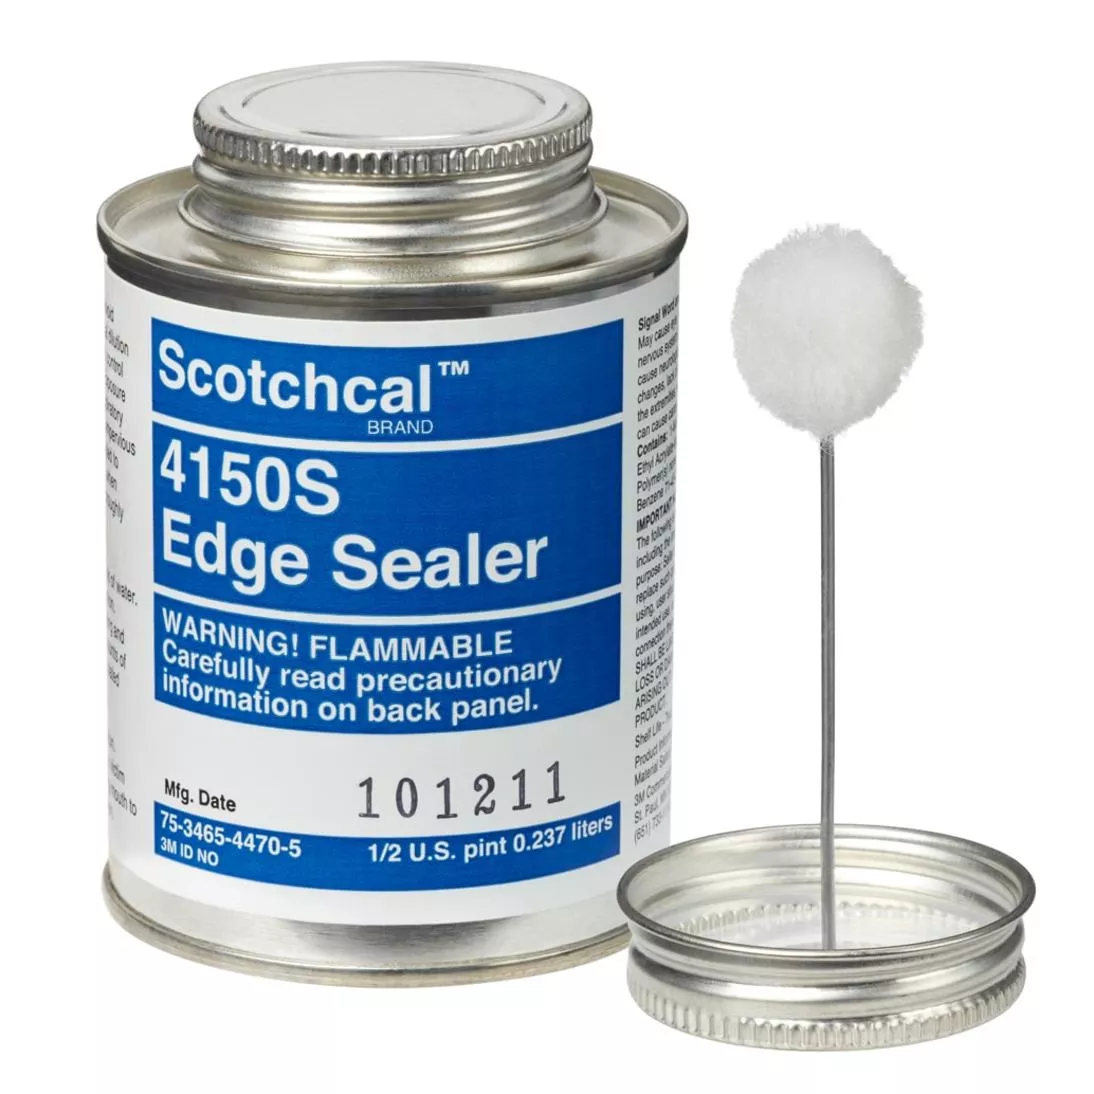 3M™ Edge Sealer 4150S, 8 oz Dauber Cans, 12/Carton